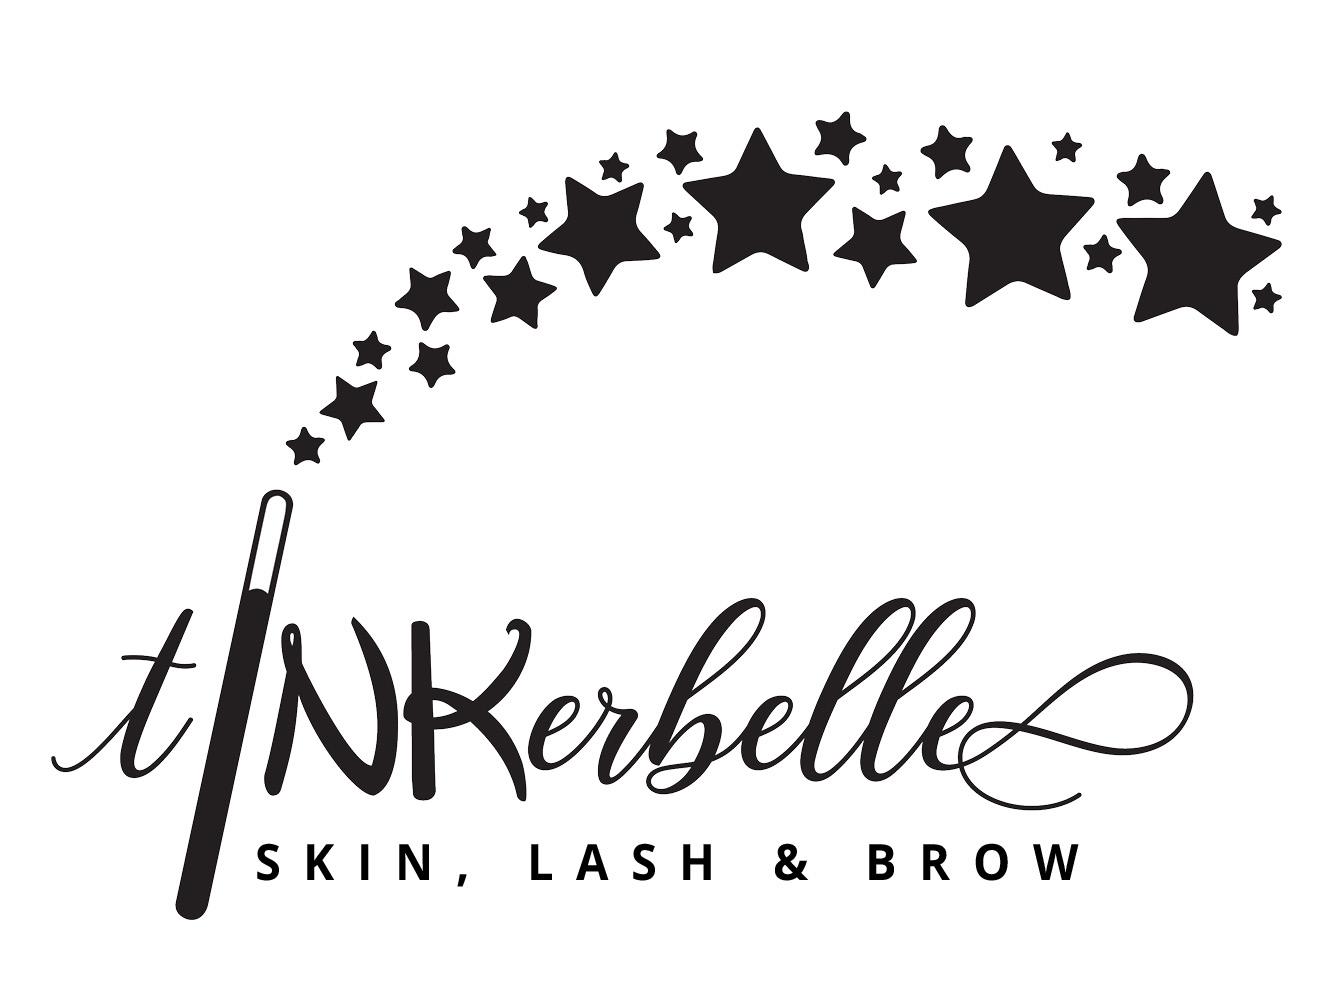 tINKerbelle Skin, Lash & Brow